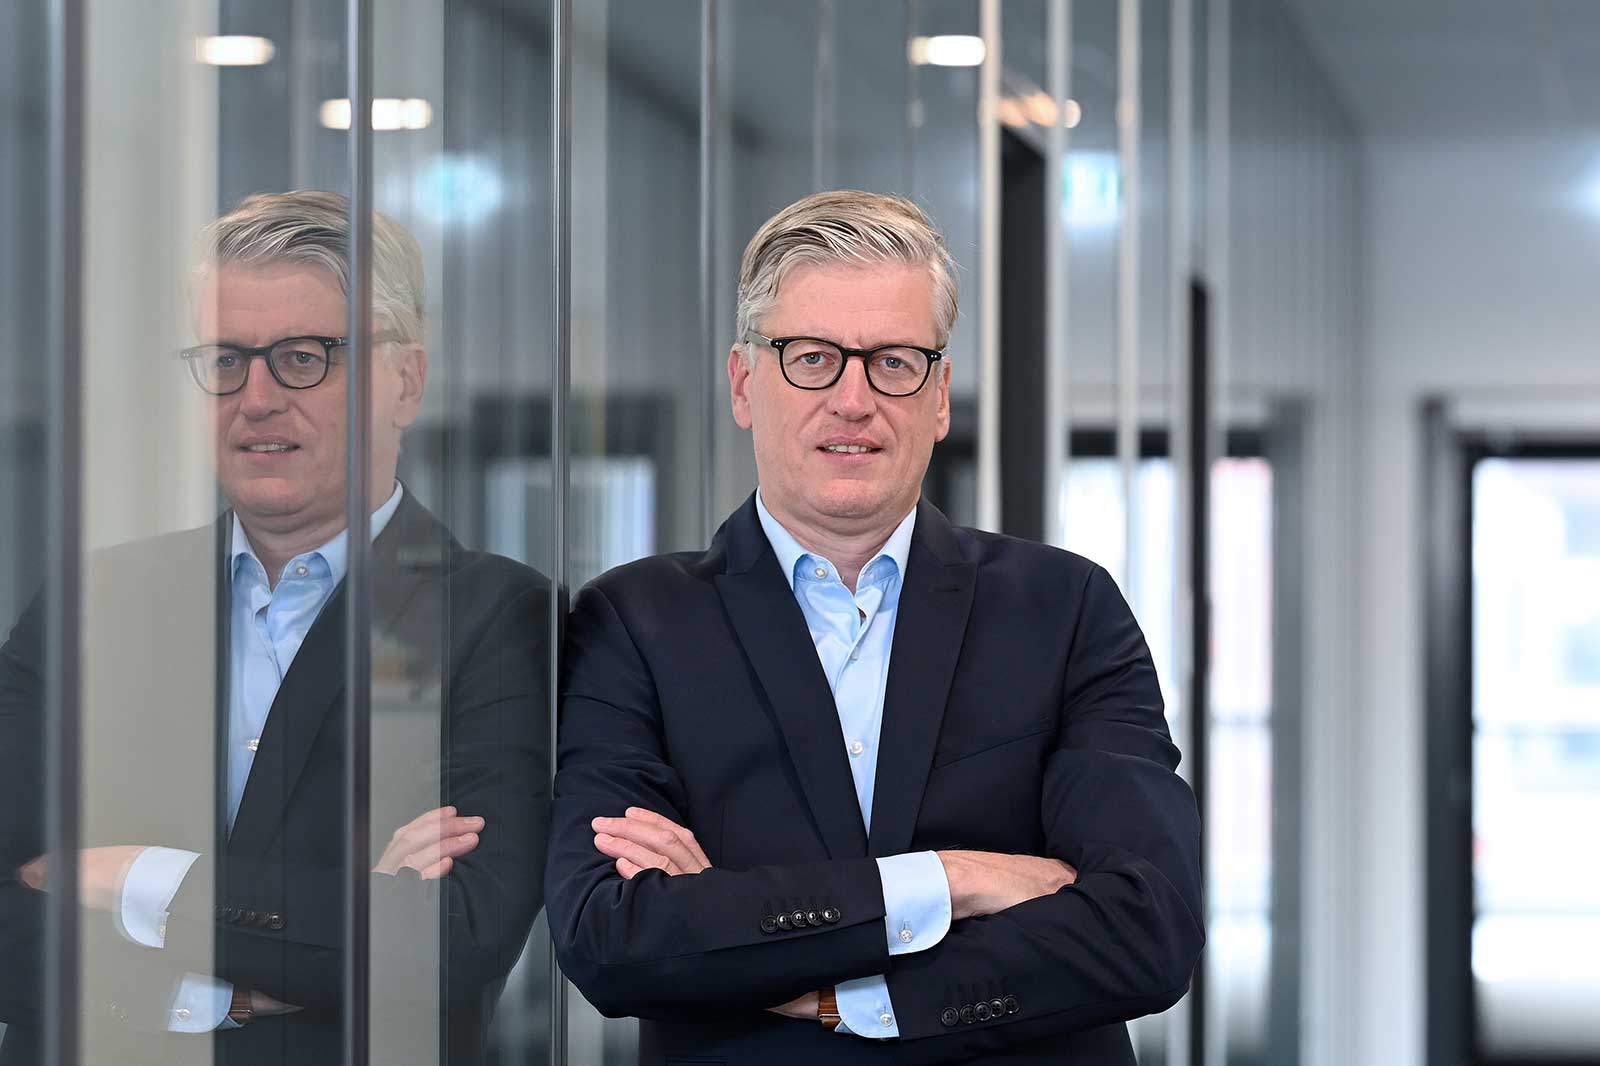 Nikolaus Valerius, Chief Executive Officer (CEO) of RWE Generation SE